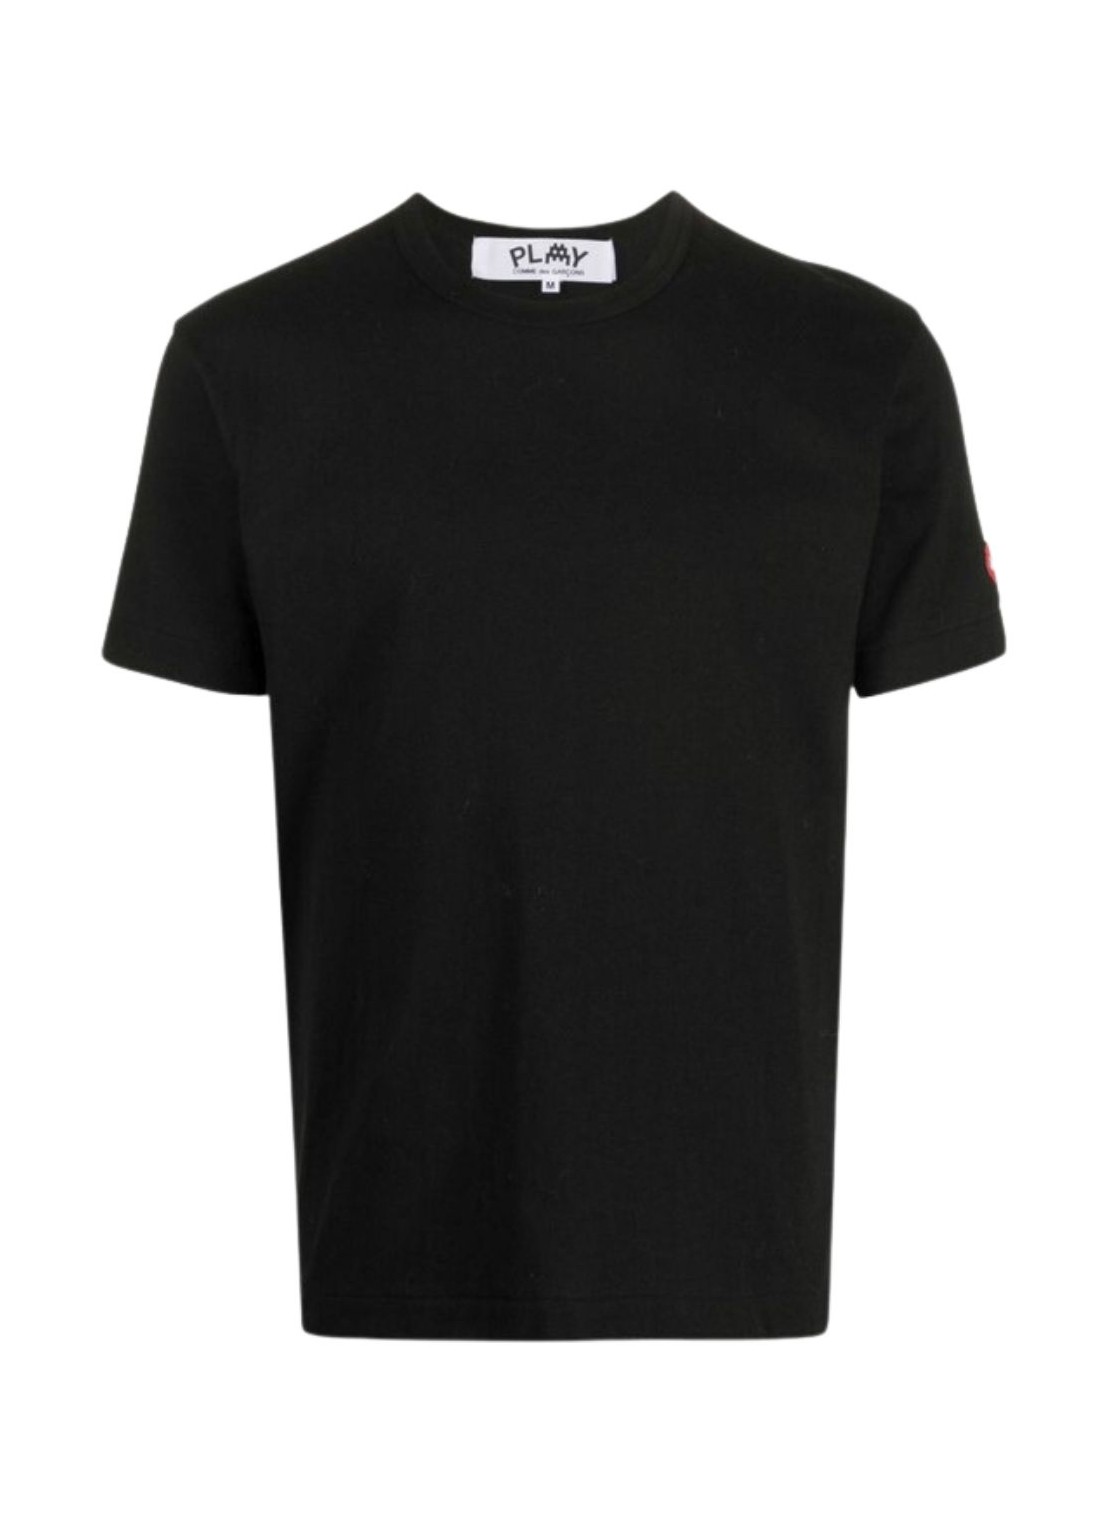 Camiseta comme des garcons t-shirt man mens t-shirt p1t328 black talla XXL
 